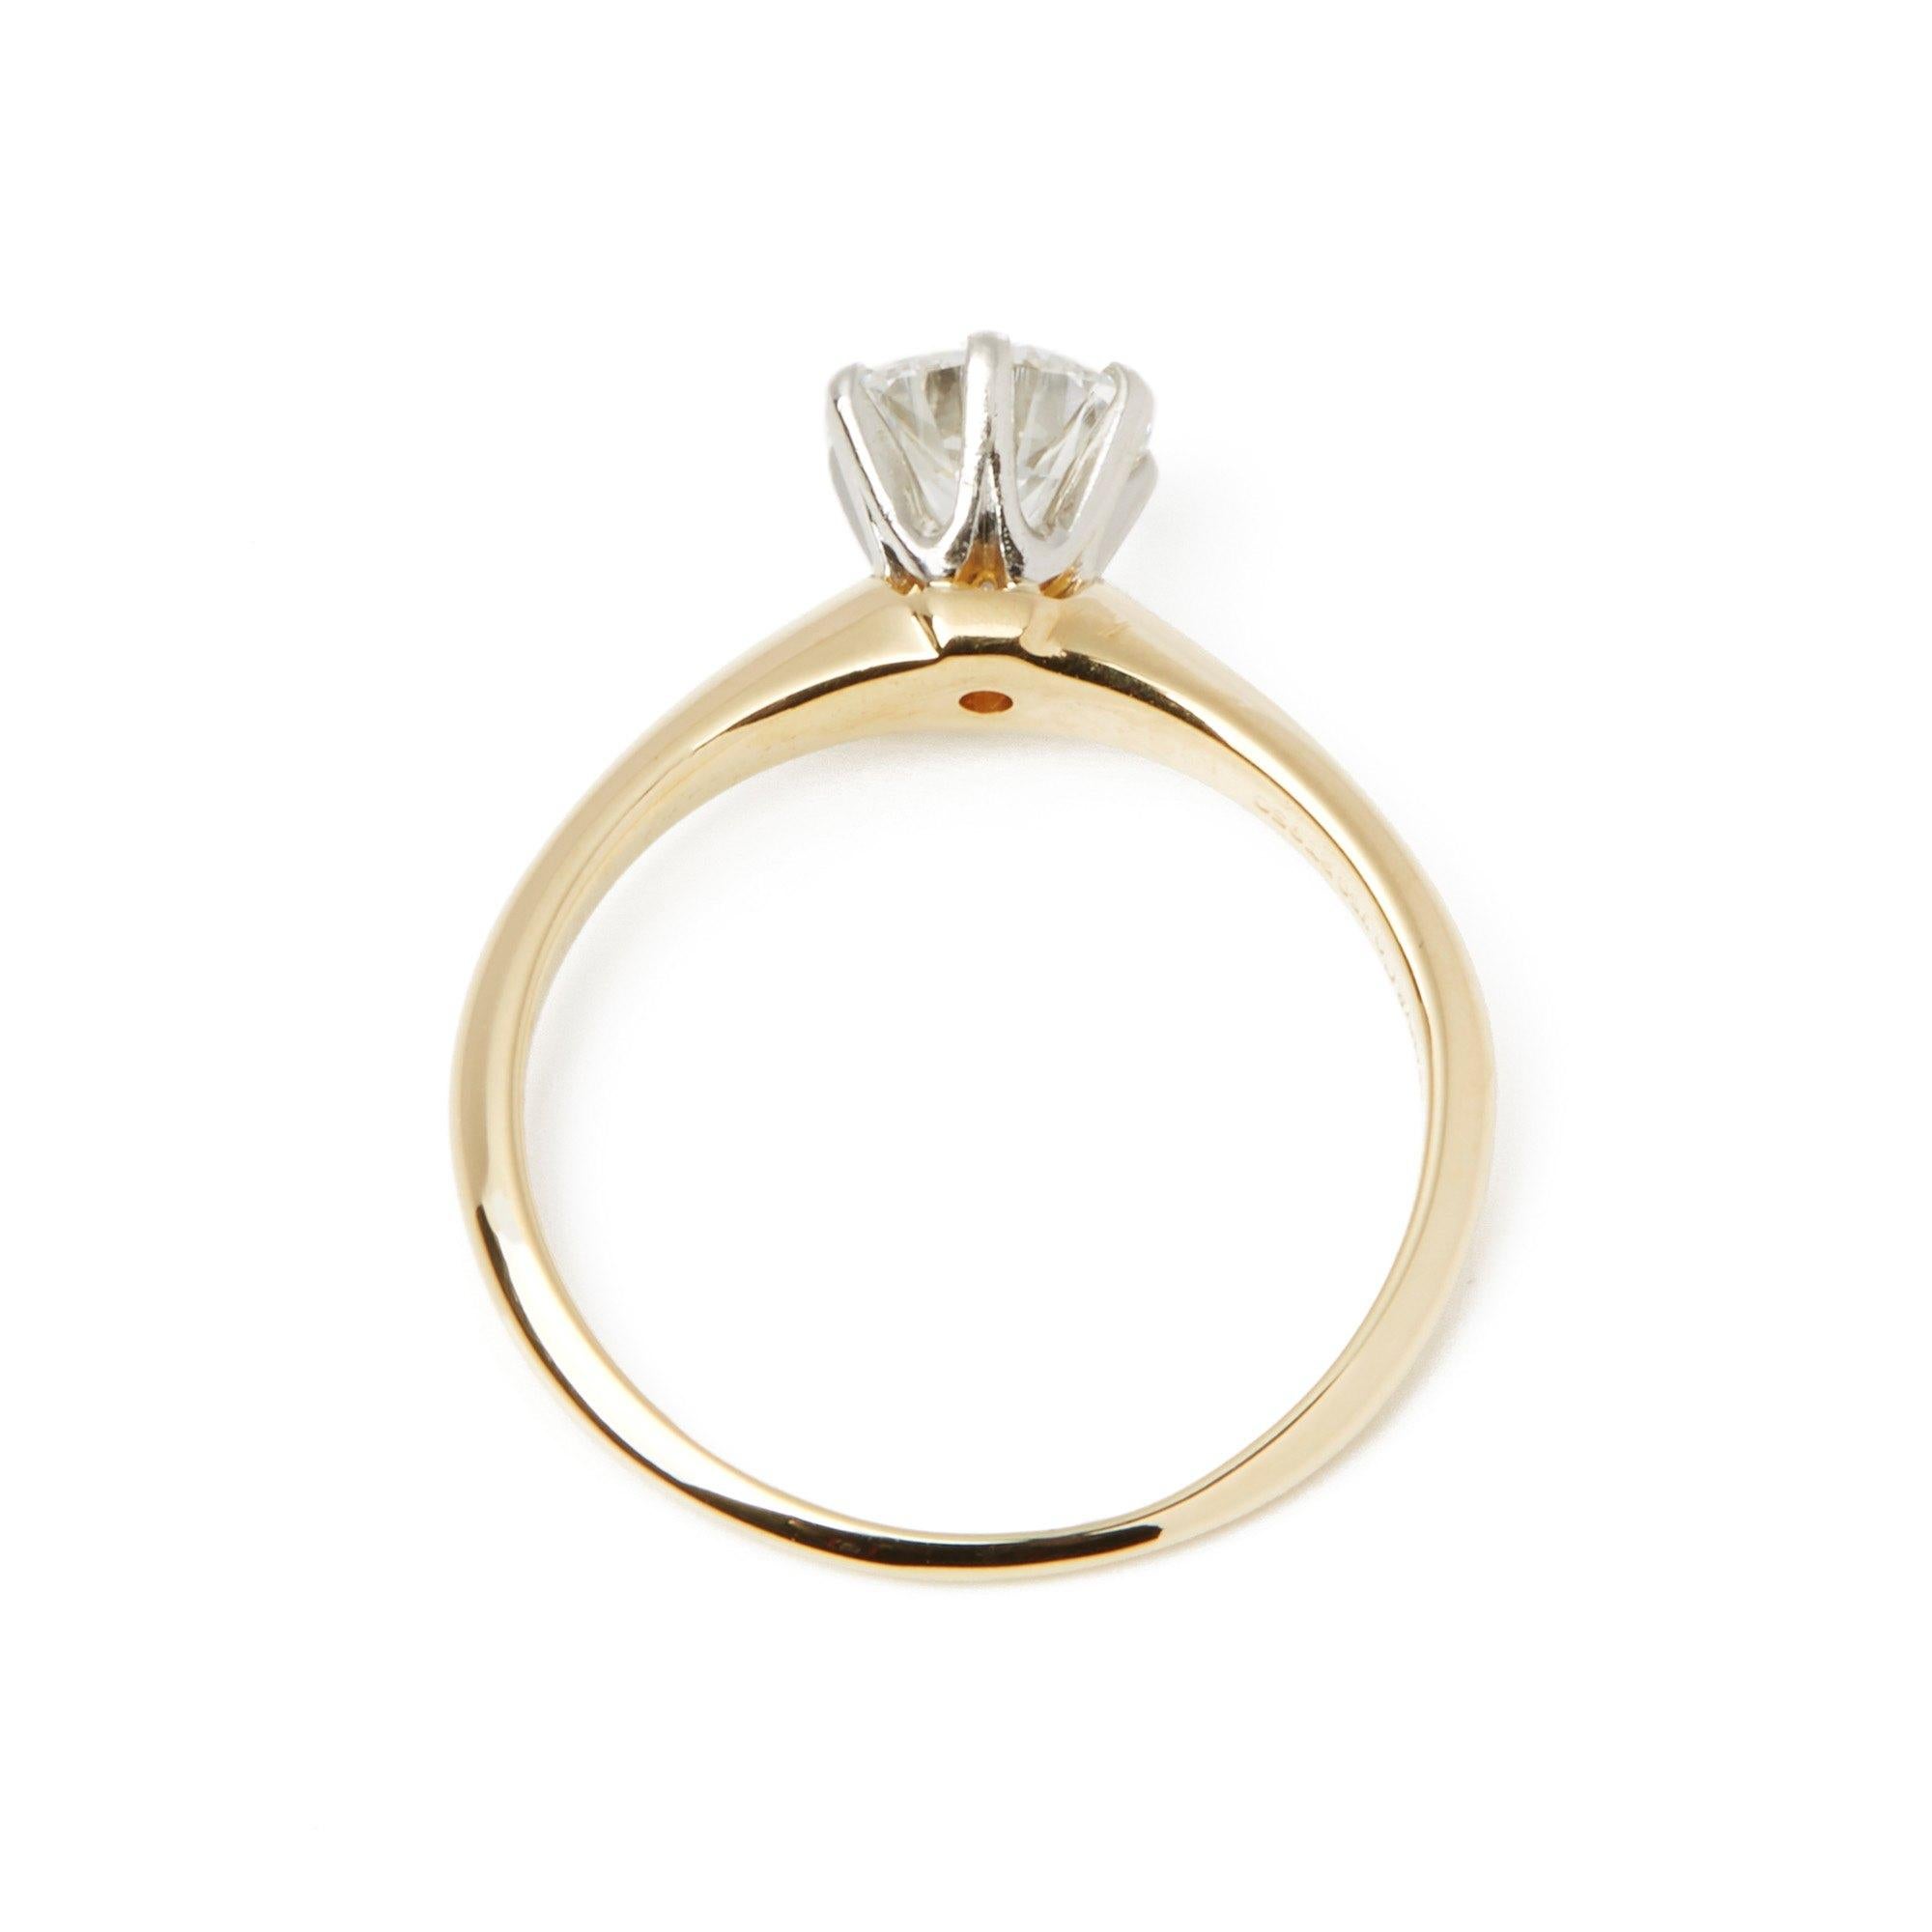 Contemporary Tiffany & Co. 18 Karat Yellow Gold Solitaire Diamond Ring